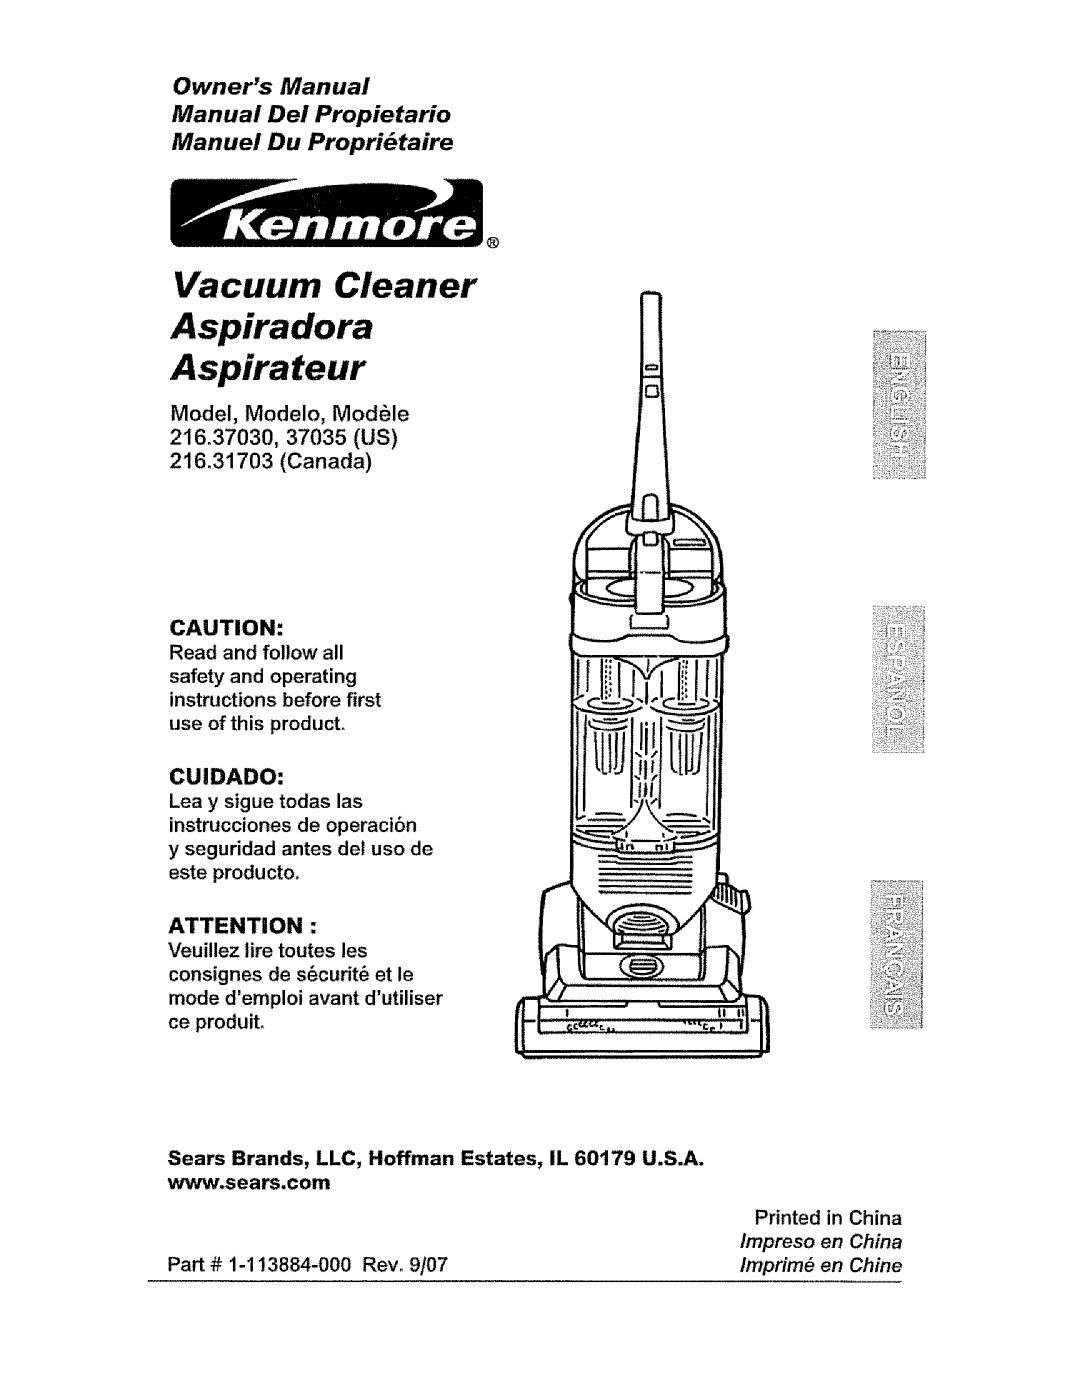 Kenmore 37035, 216.31703 owner manual Model, Modelo, Mod61e, Vacuum Cleaner Aspiradora Aspirateur, Manuel Du Propri taire 